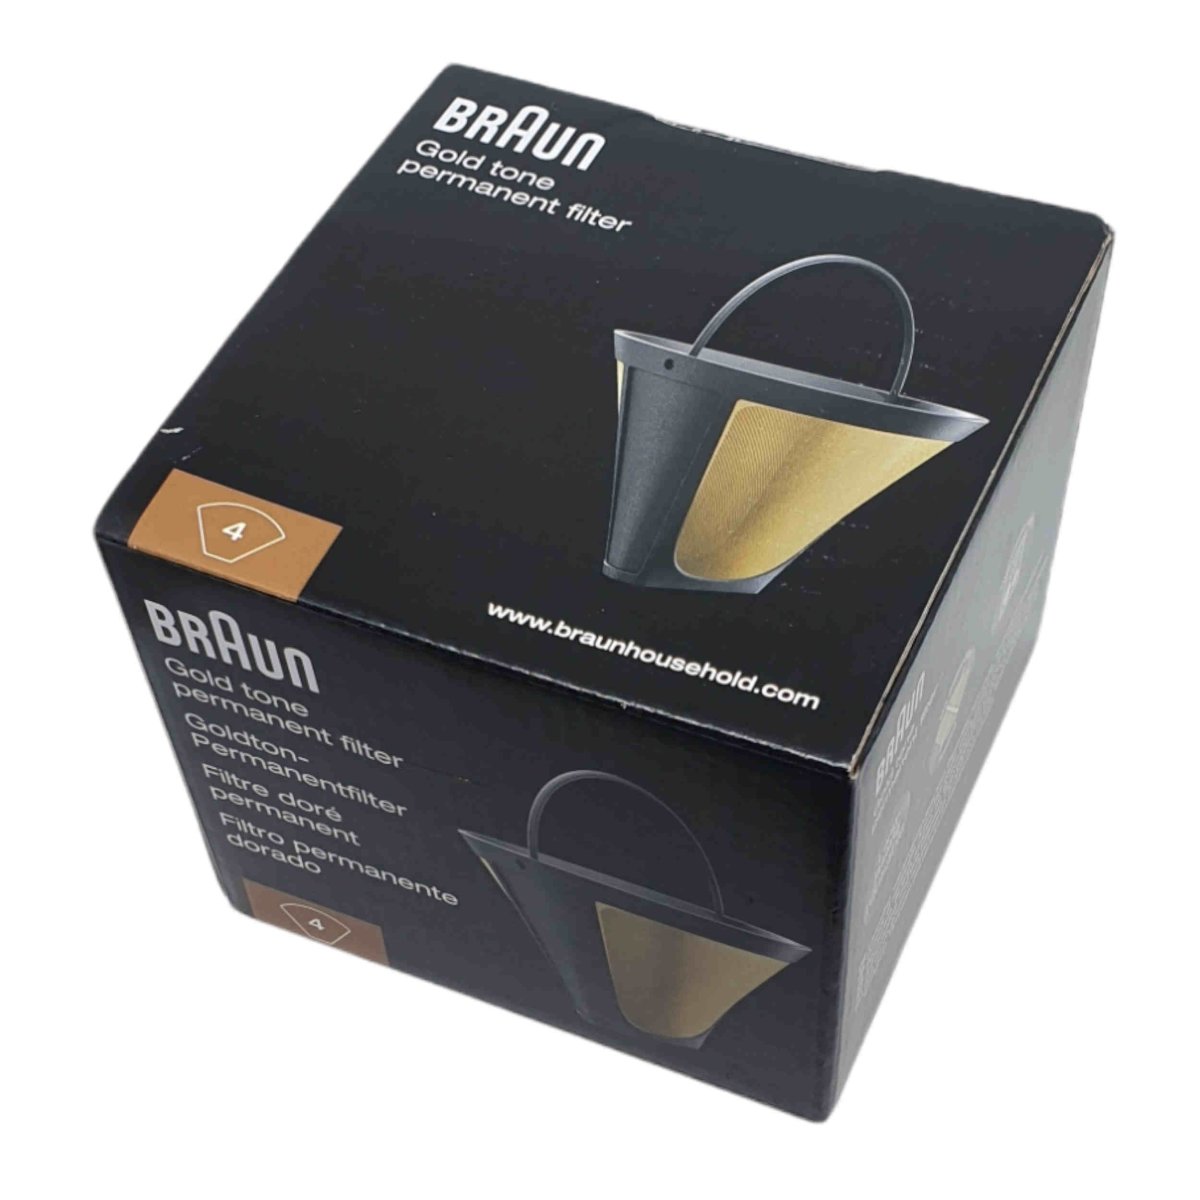 € PurAroma Kaffeeautomat Goldfilter Braun KF7020 zu Einsatz / 10,99 KF7120, 7